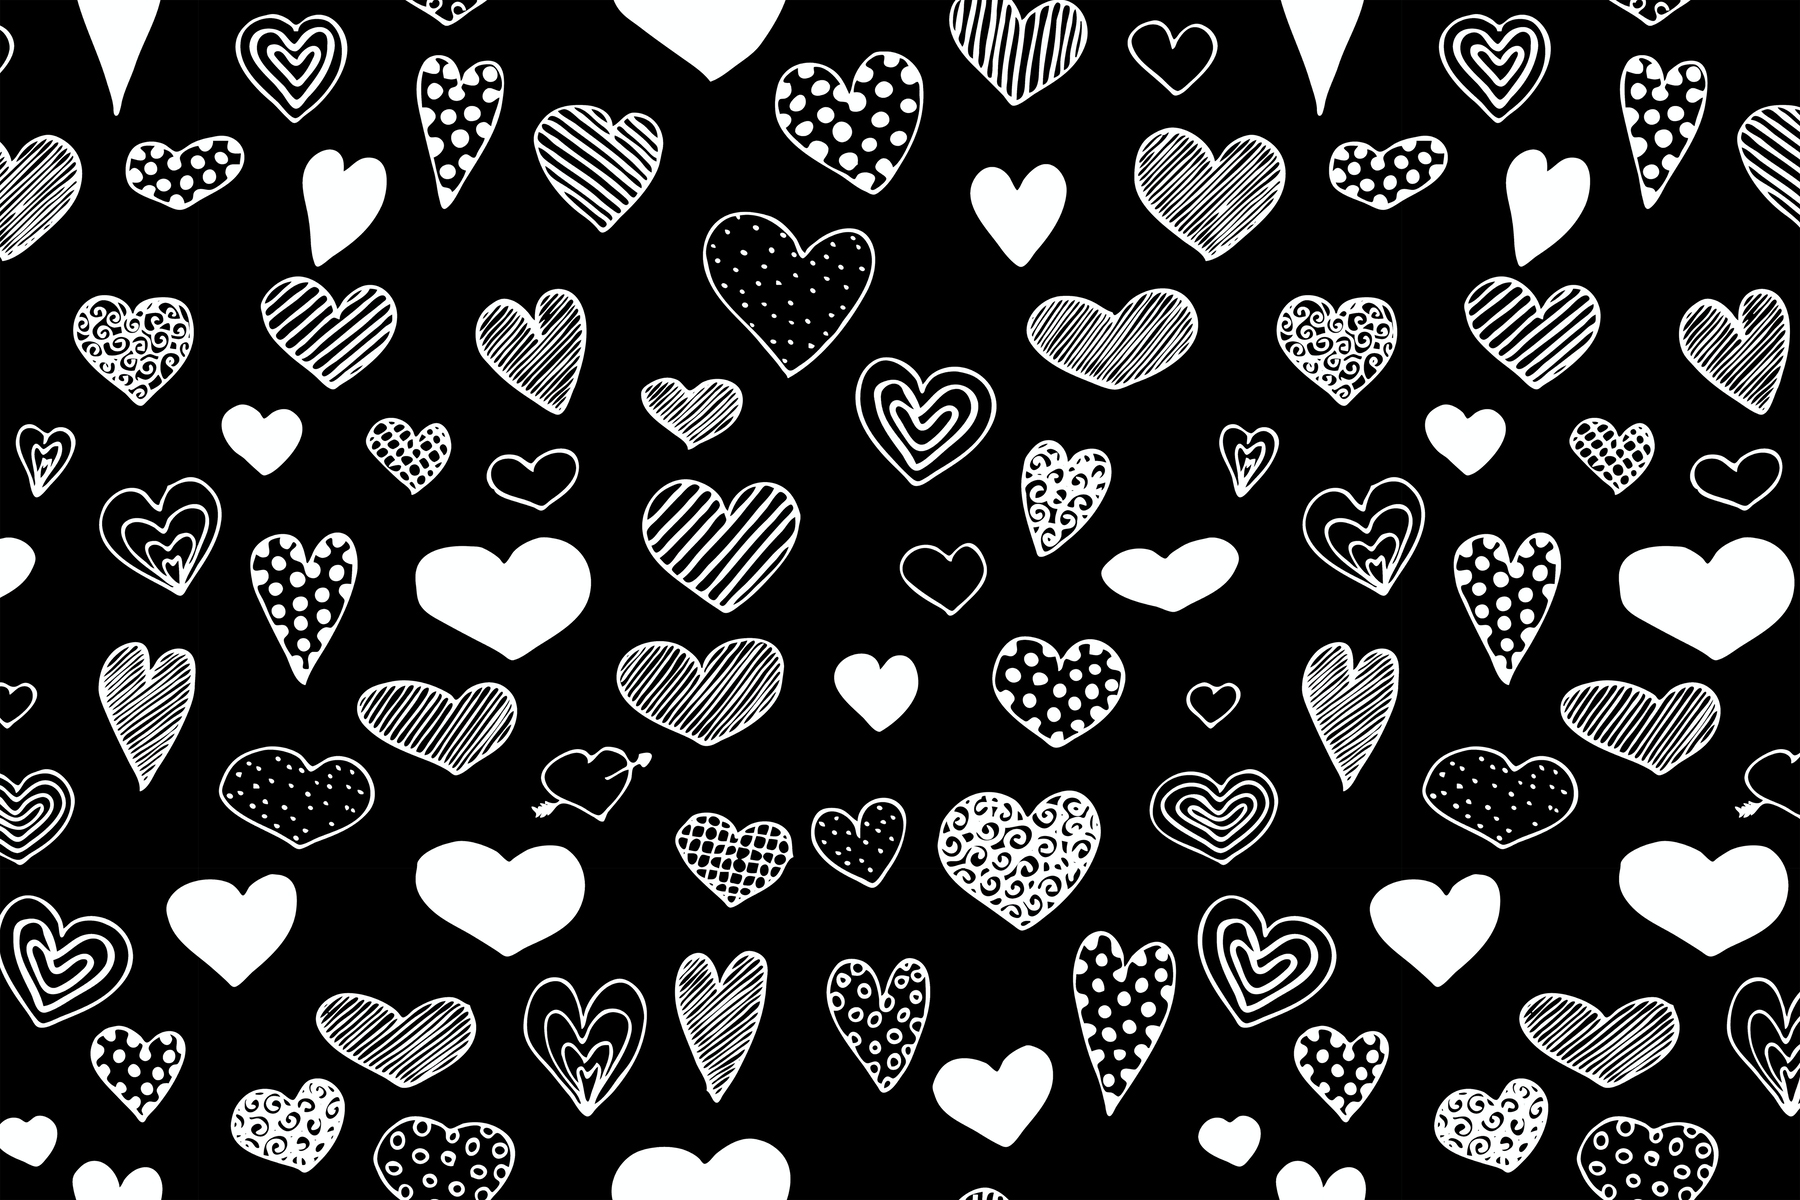 Buy Heart Doodles Black and White wallpaper